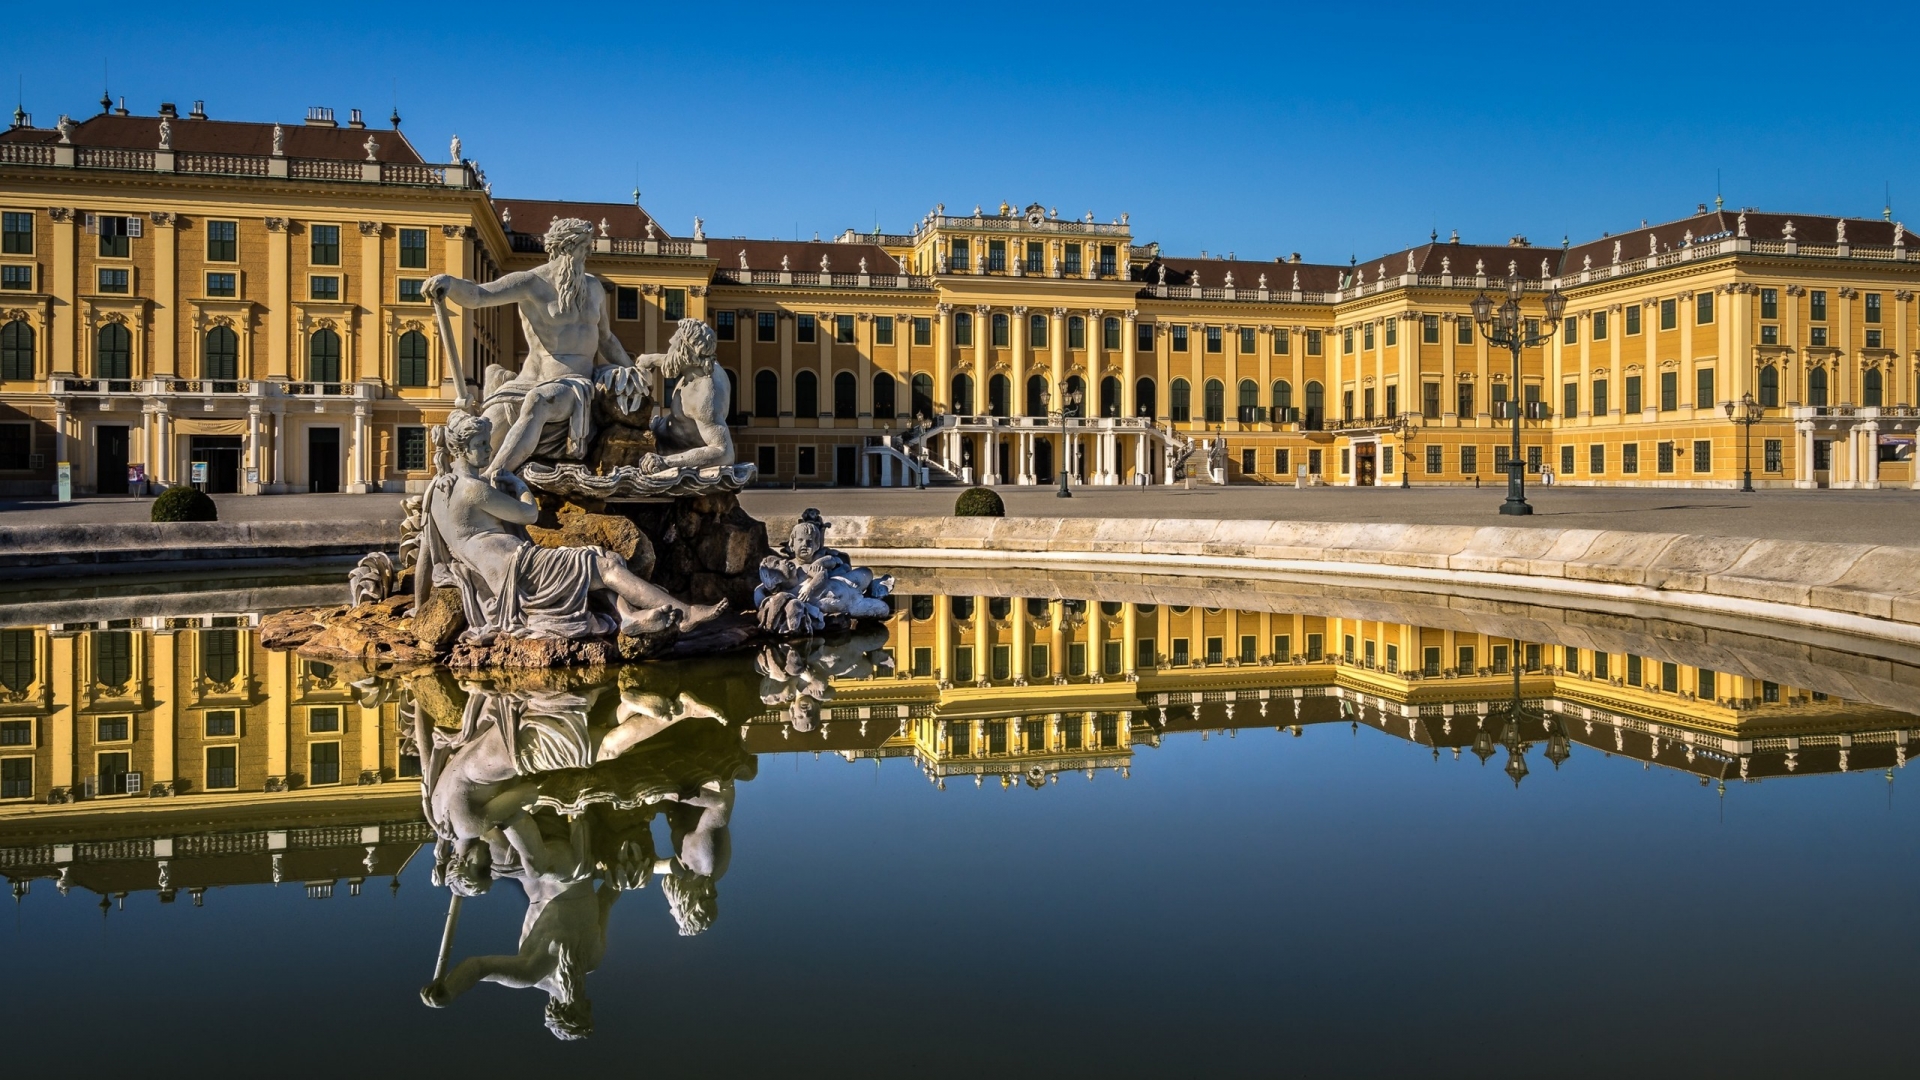 Schonbrunn Palace View for 1920 x 1080 HDTV 1080p resolution